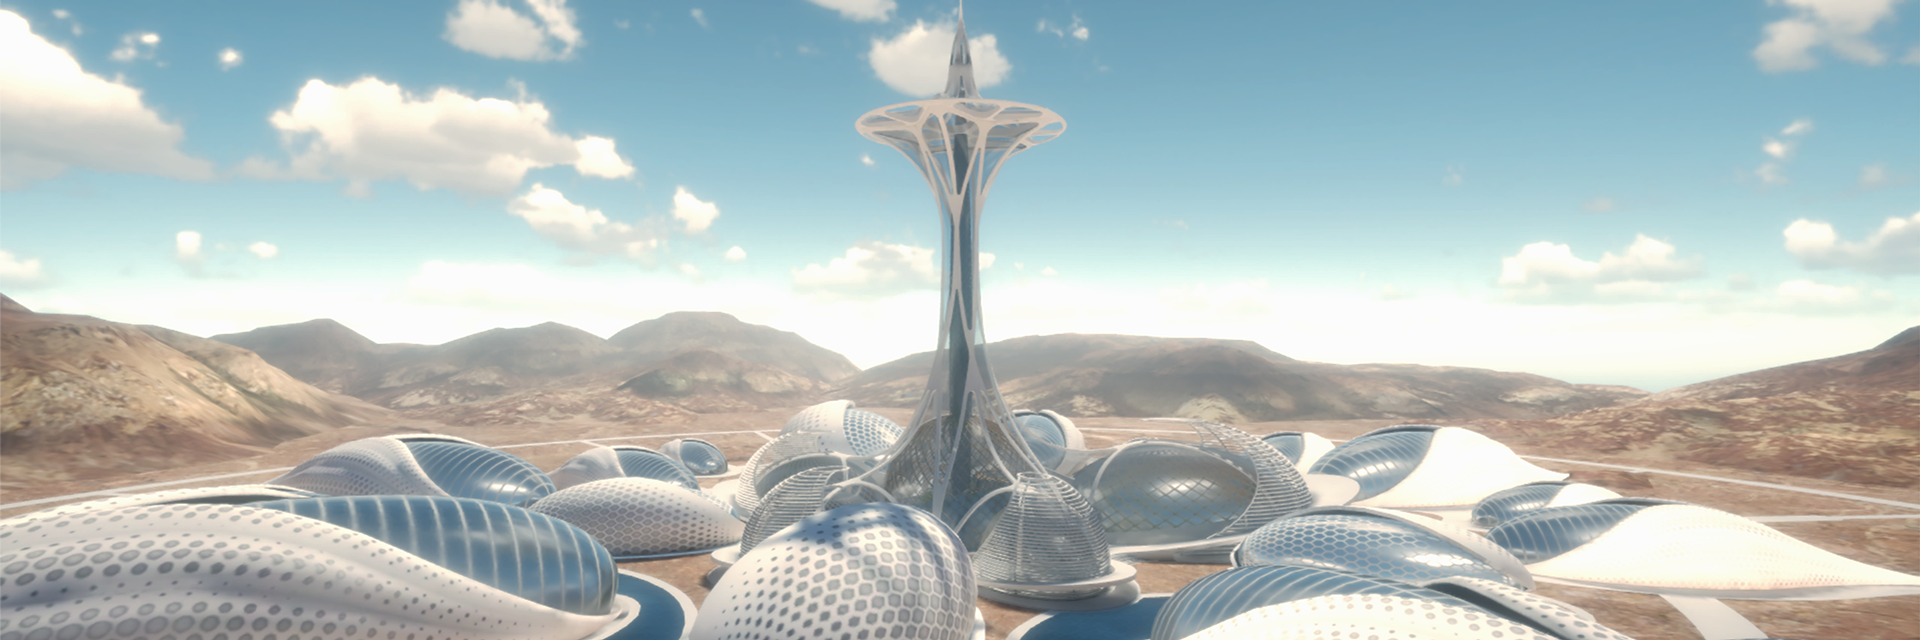 Barren landscape with futuristic constructions.